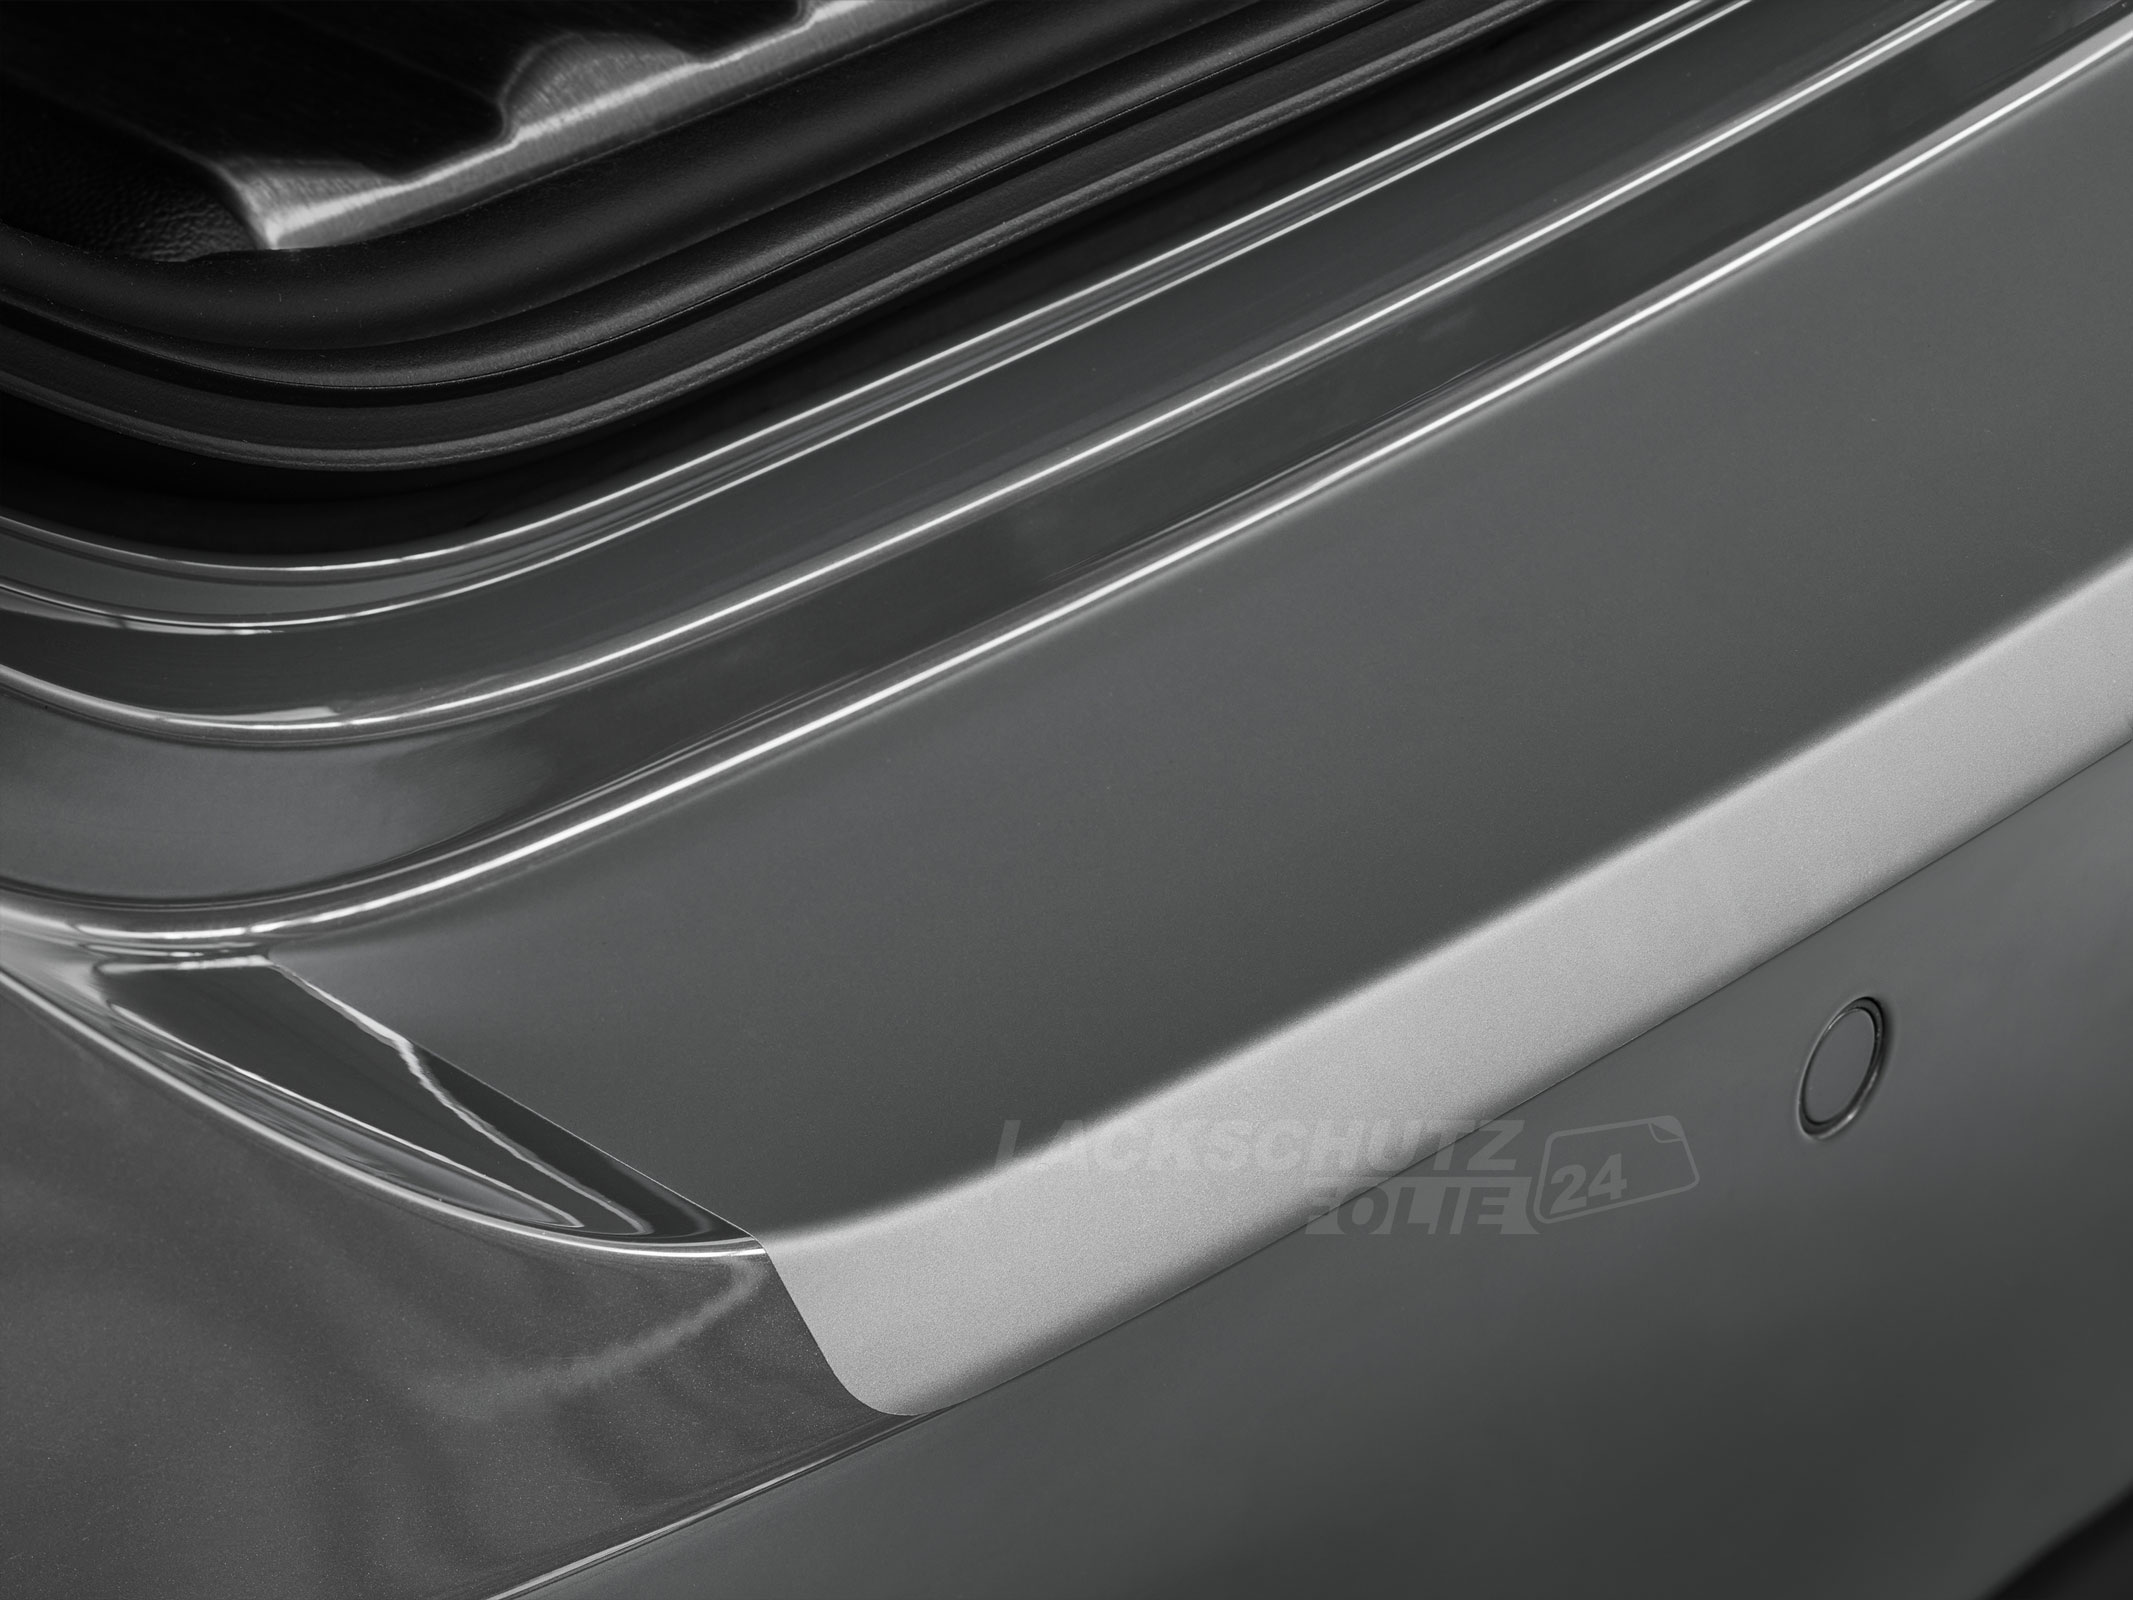 Ladekantenschutzfolie - Transparent Glatt MATT 110 µm stark  für VW / Volkswagen Passat Limousine B8, Typ 3G, ab BJ 11/2014 + Faceliftmodell